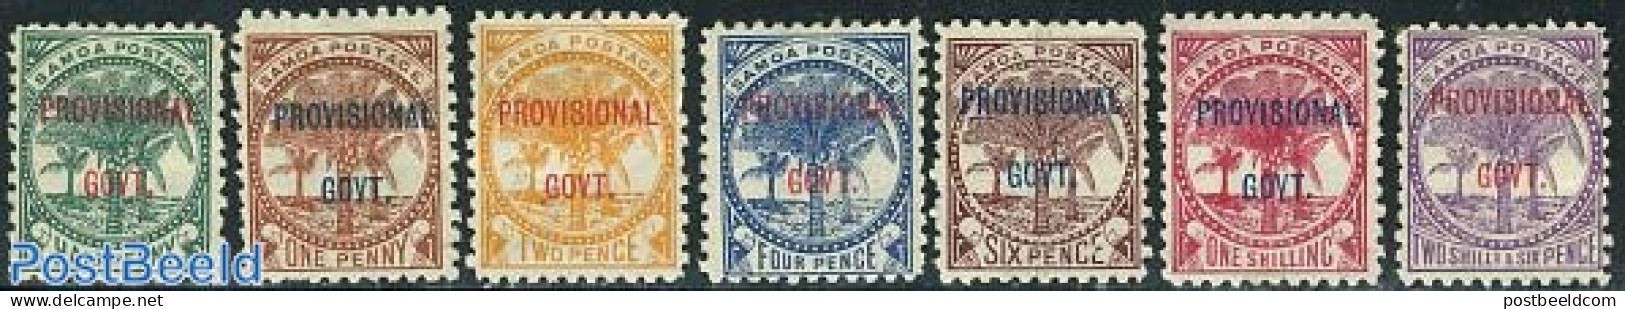 Samoa 1899 PROVISIONAL GOVT. Overprints 7v, Unused (hinged) - Samoa (Staat)